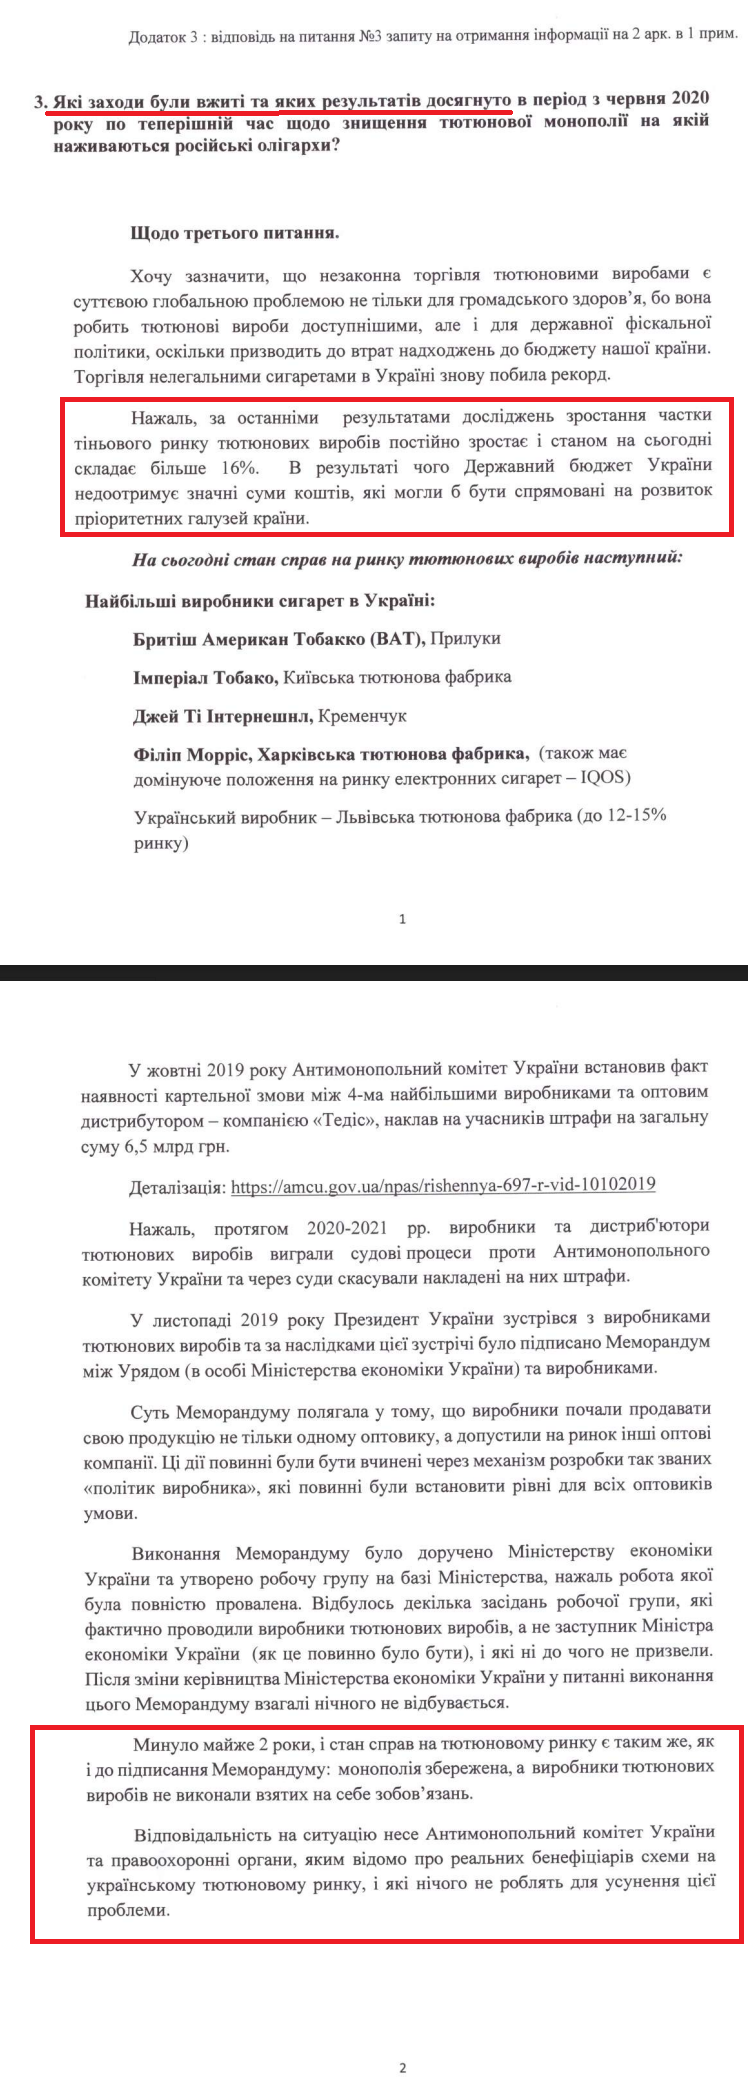 Лист народного депутата України